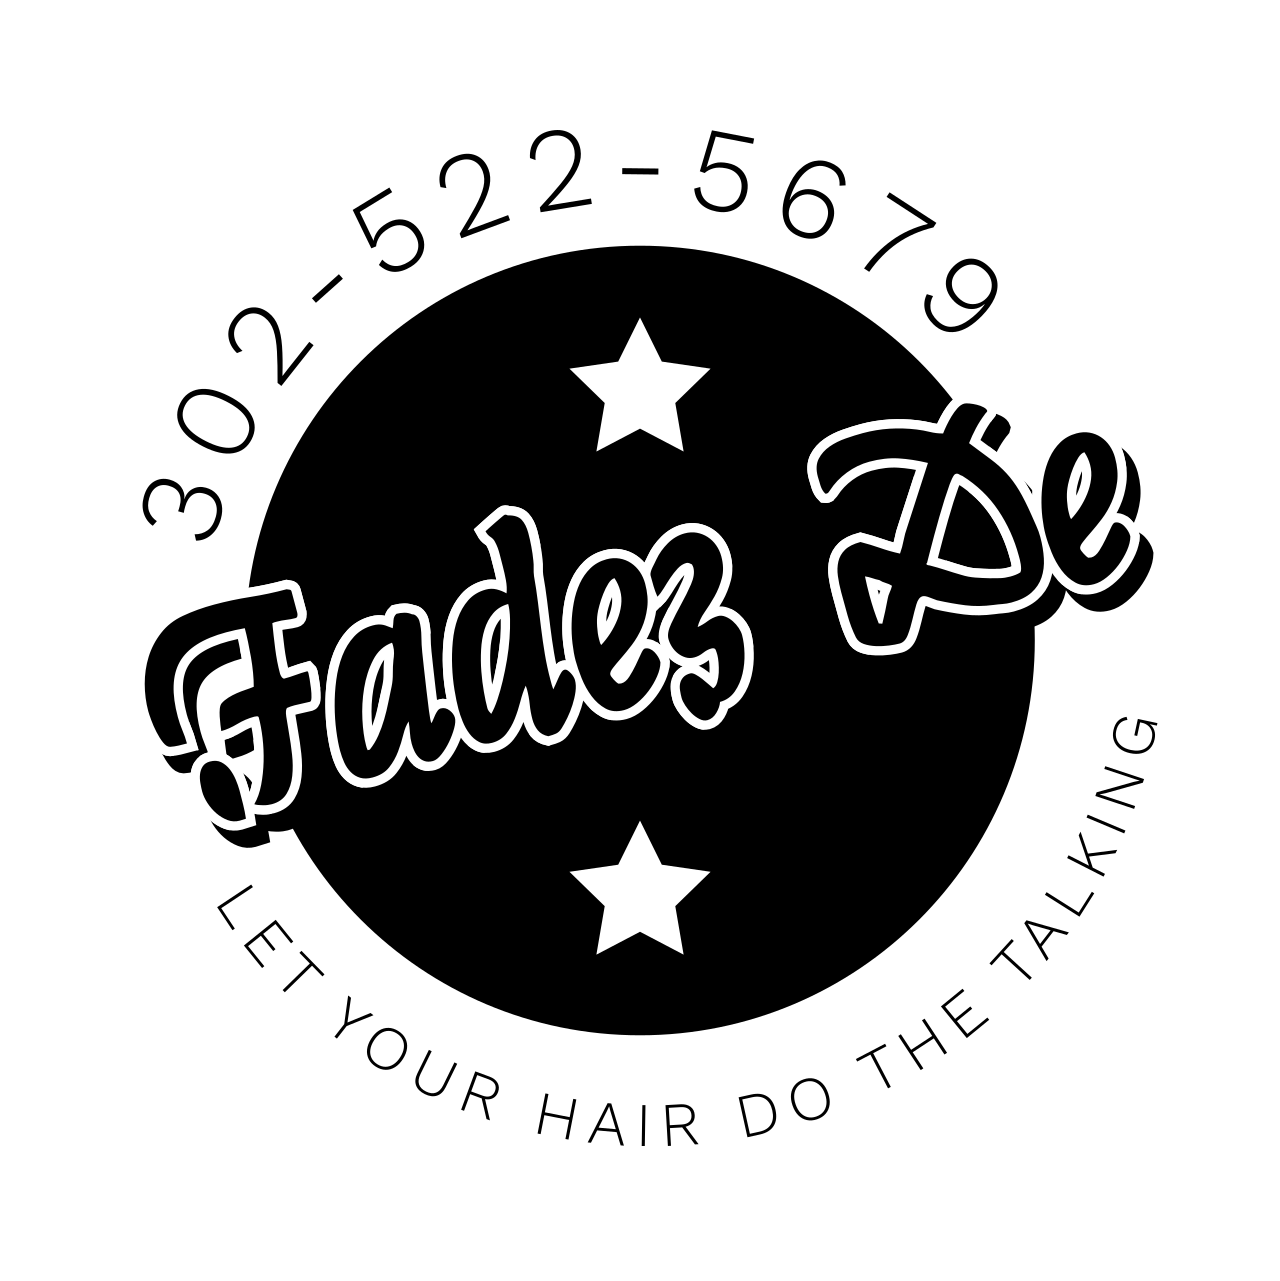 Fadez De's web page